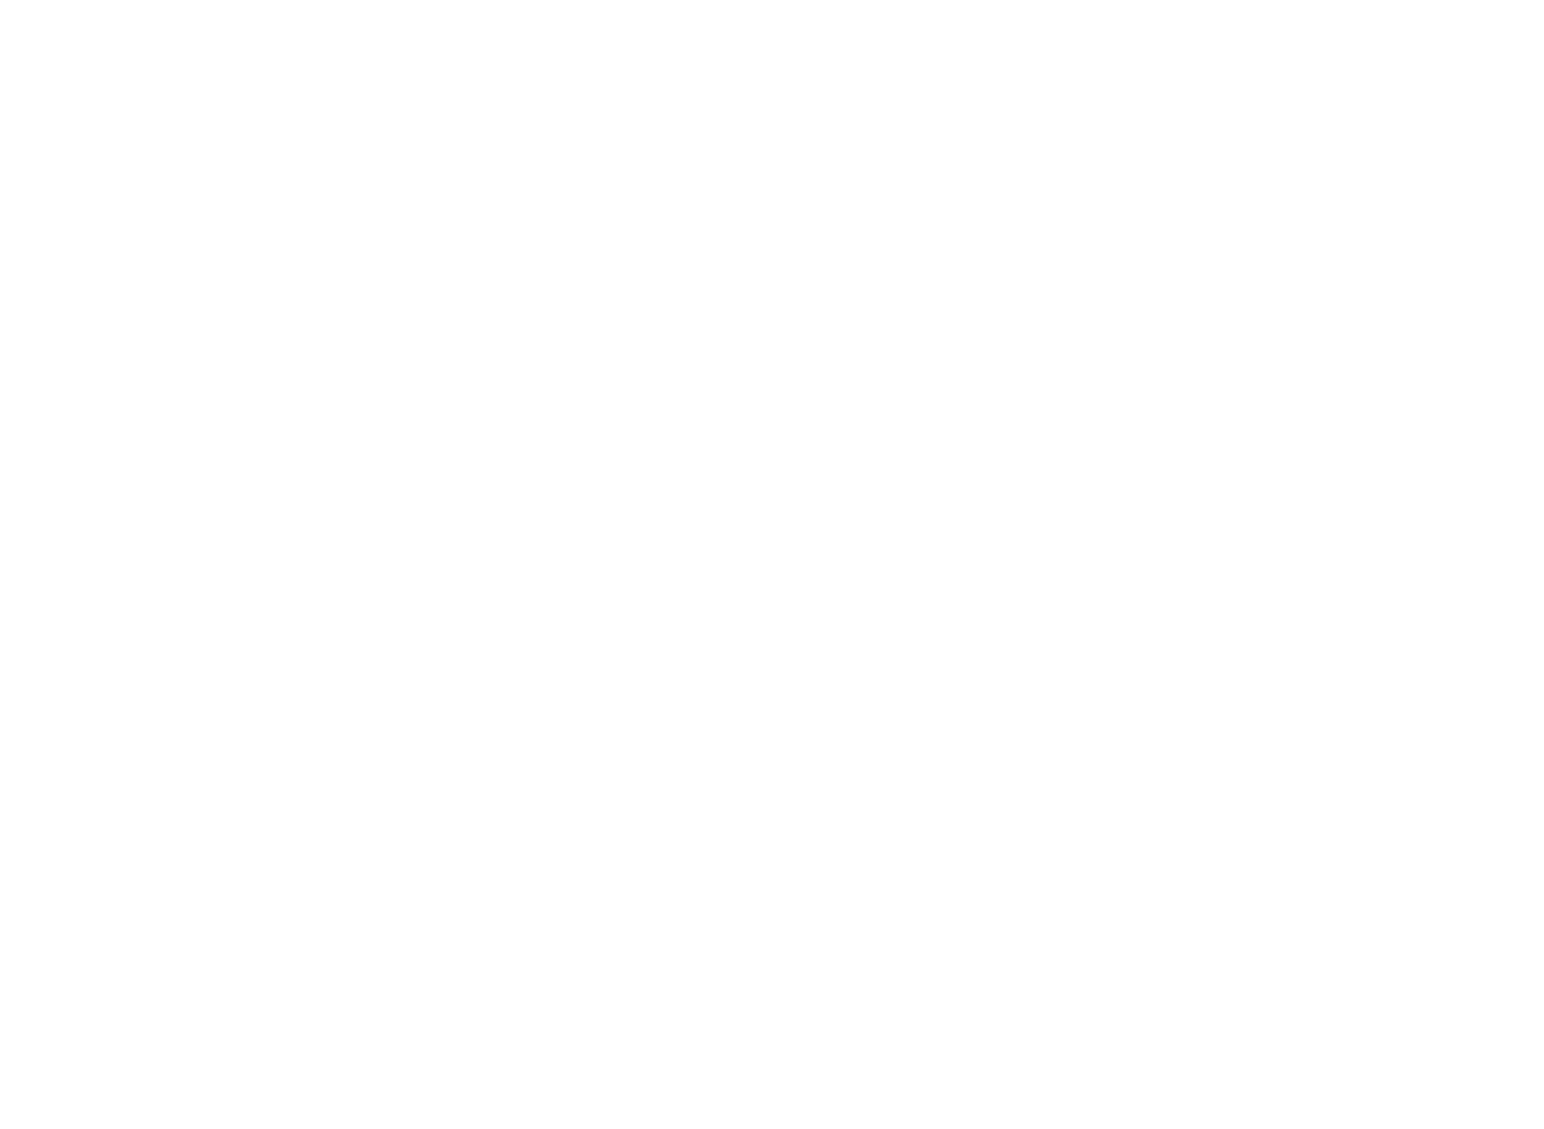 UmweltBank logo grand pour les fonds sombres (PNG transparent)